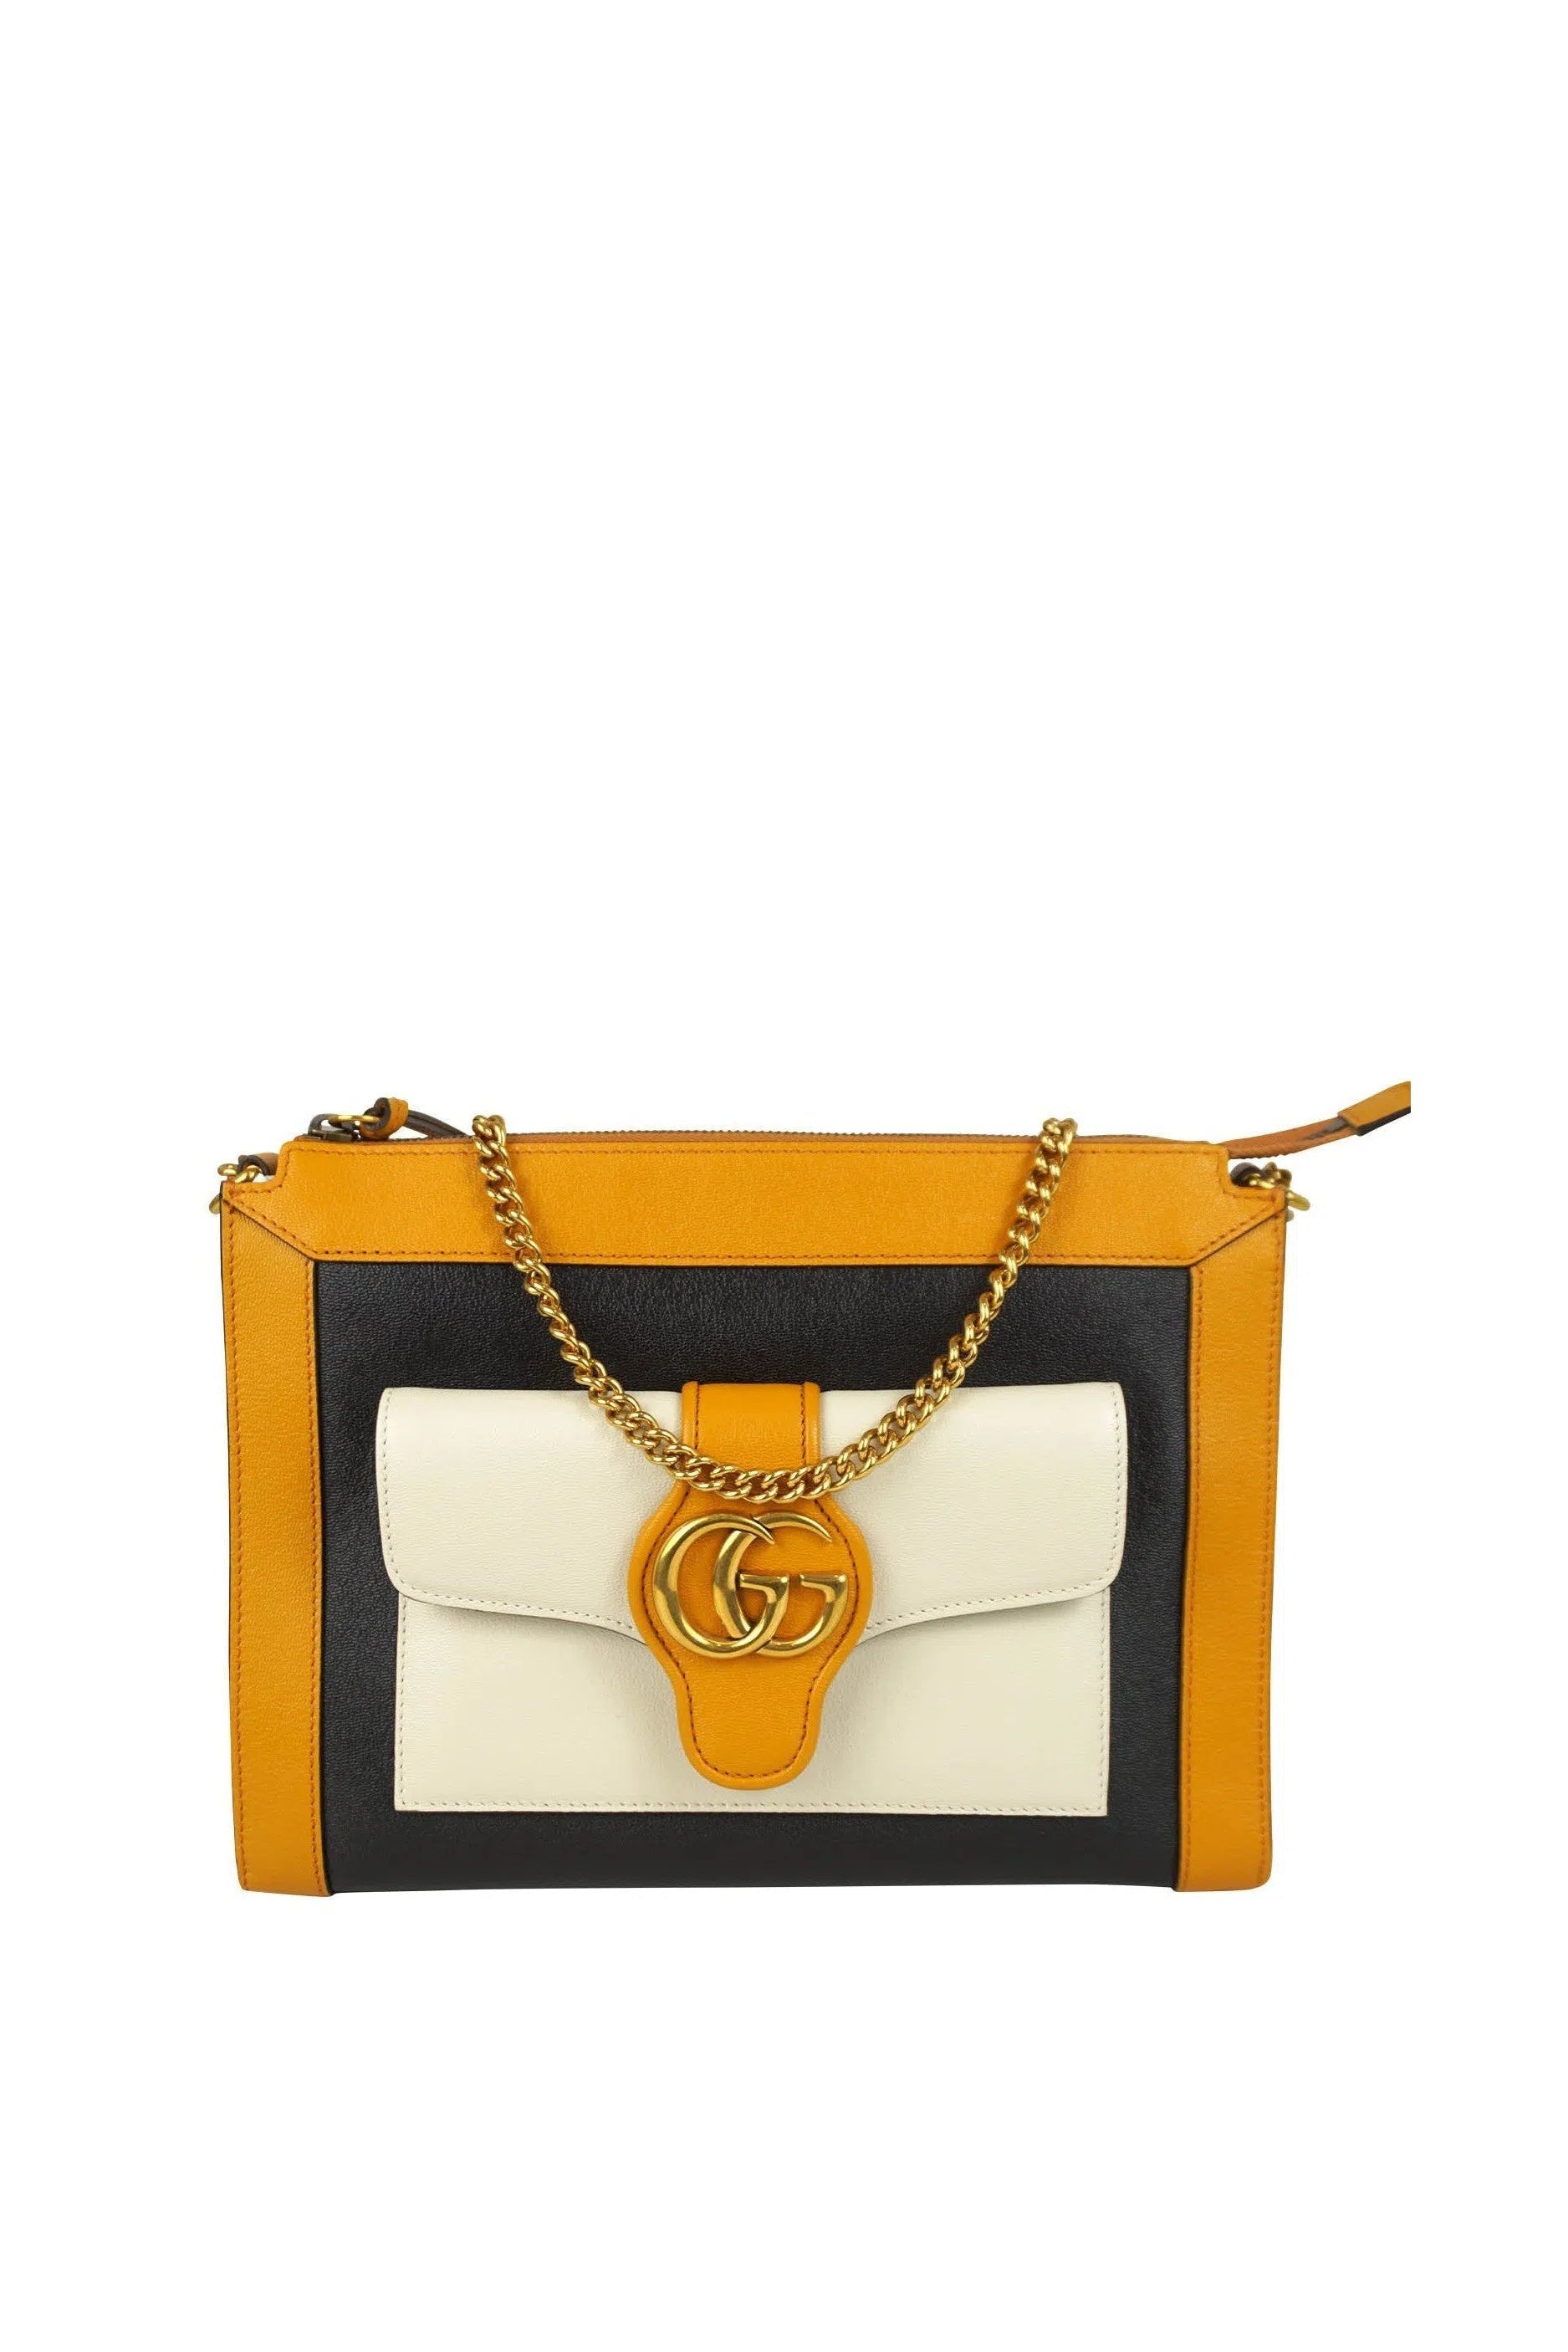 Gucci Dhalia GG Shoulder Bag 2021